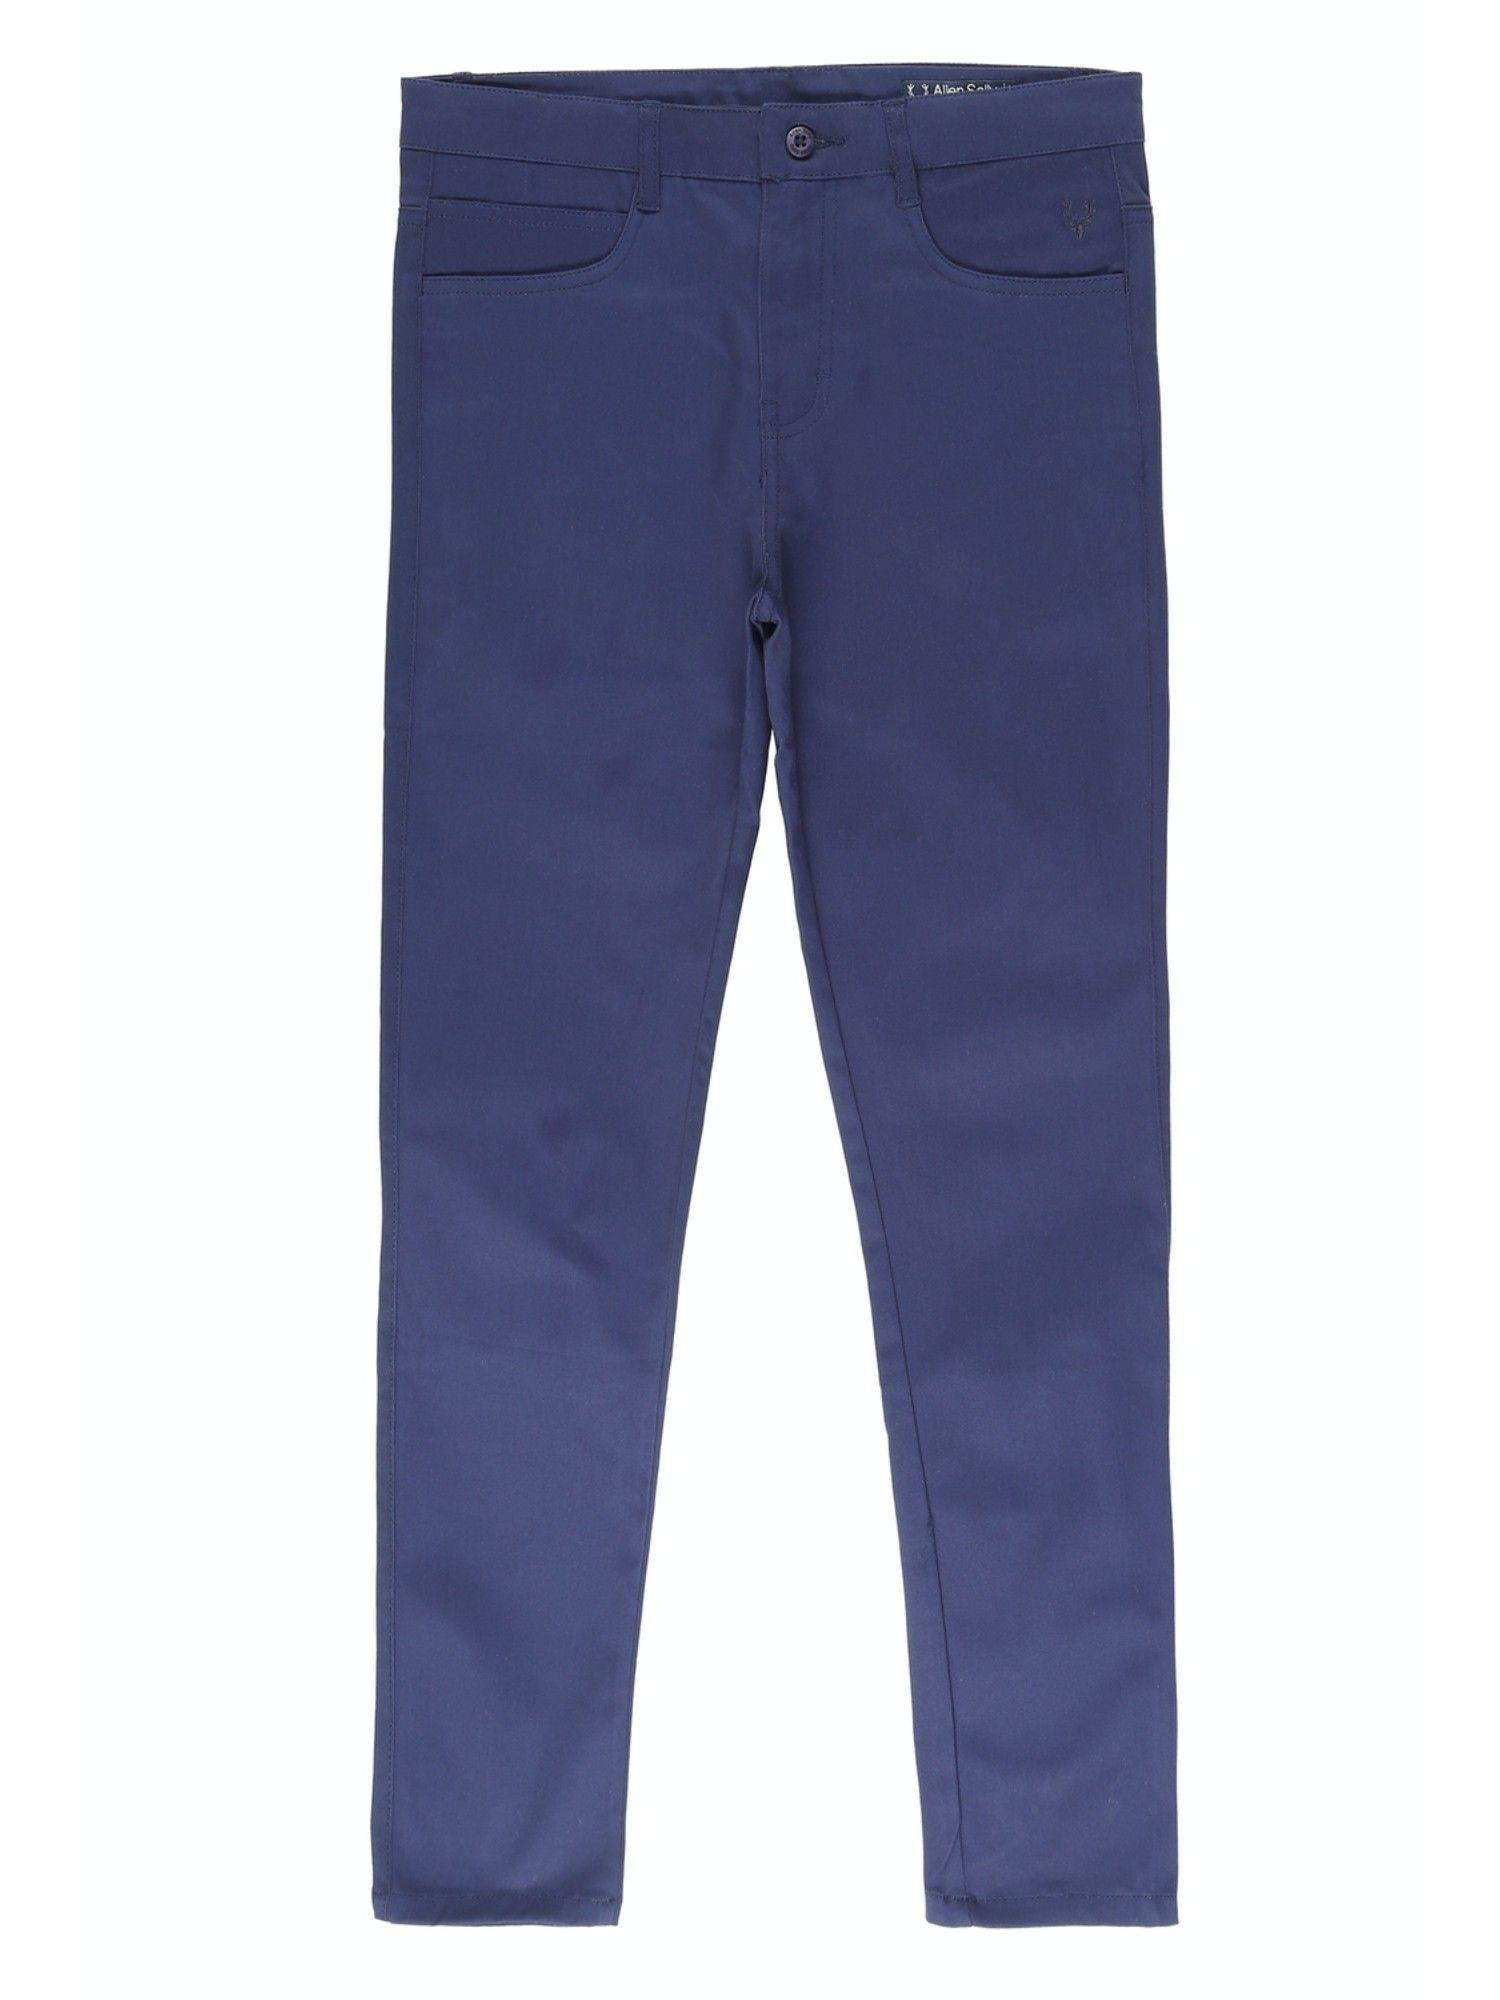 boys blue plain trousers